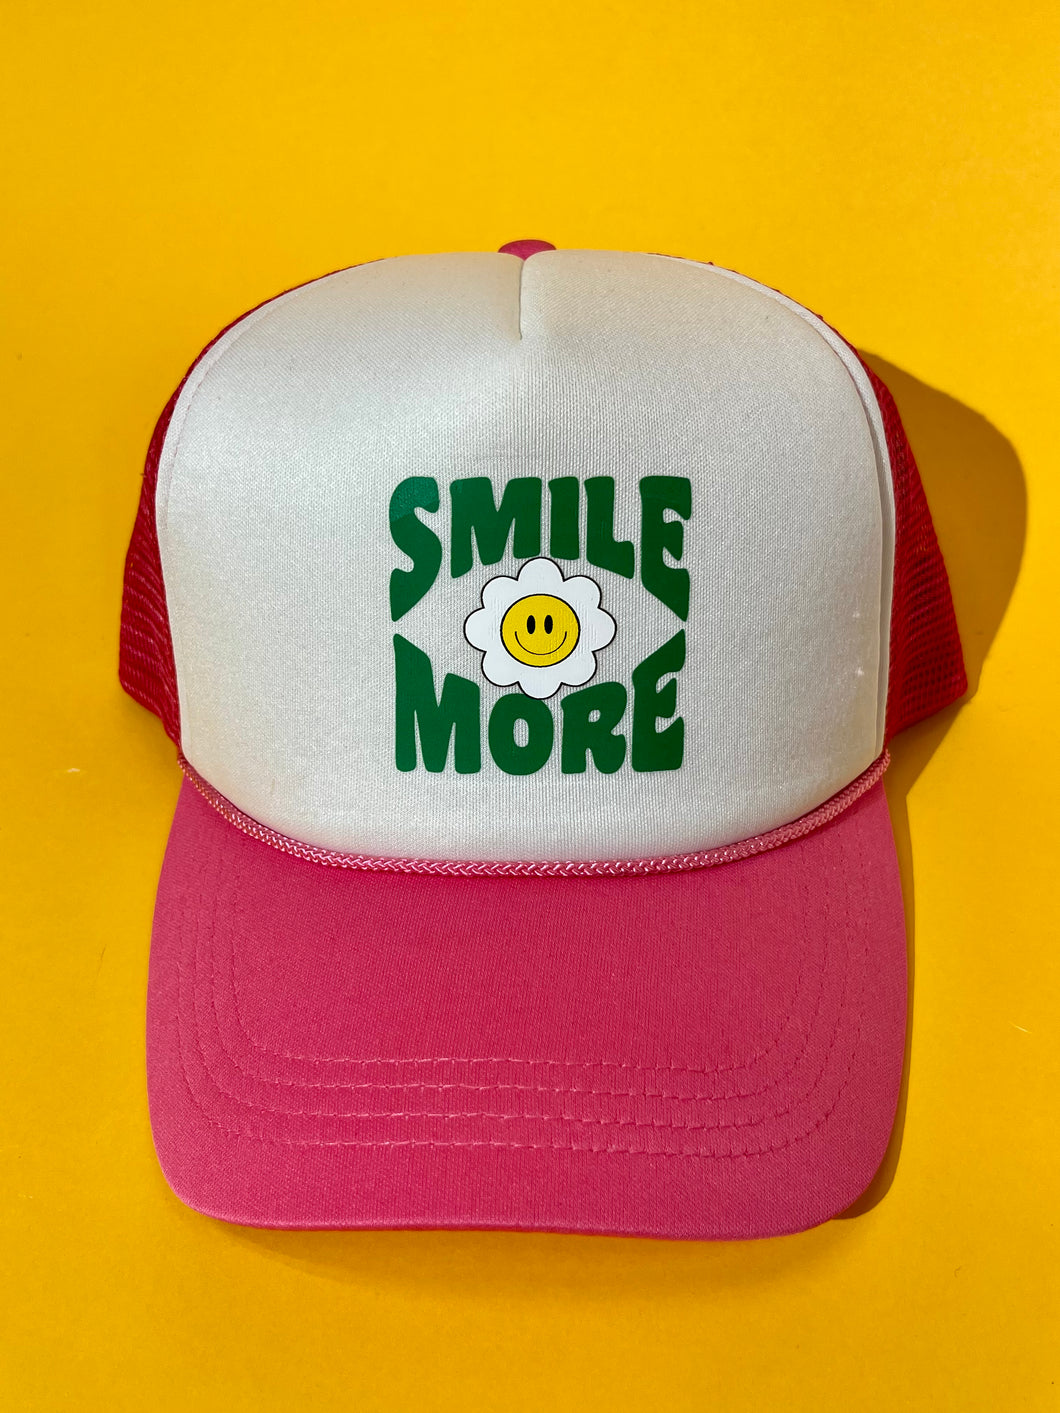 Smile more hot pink trucker hat